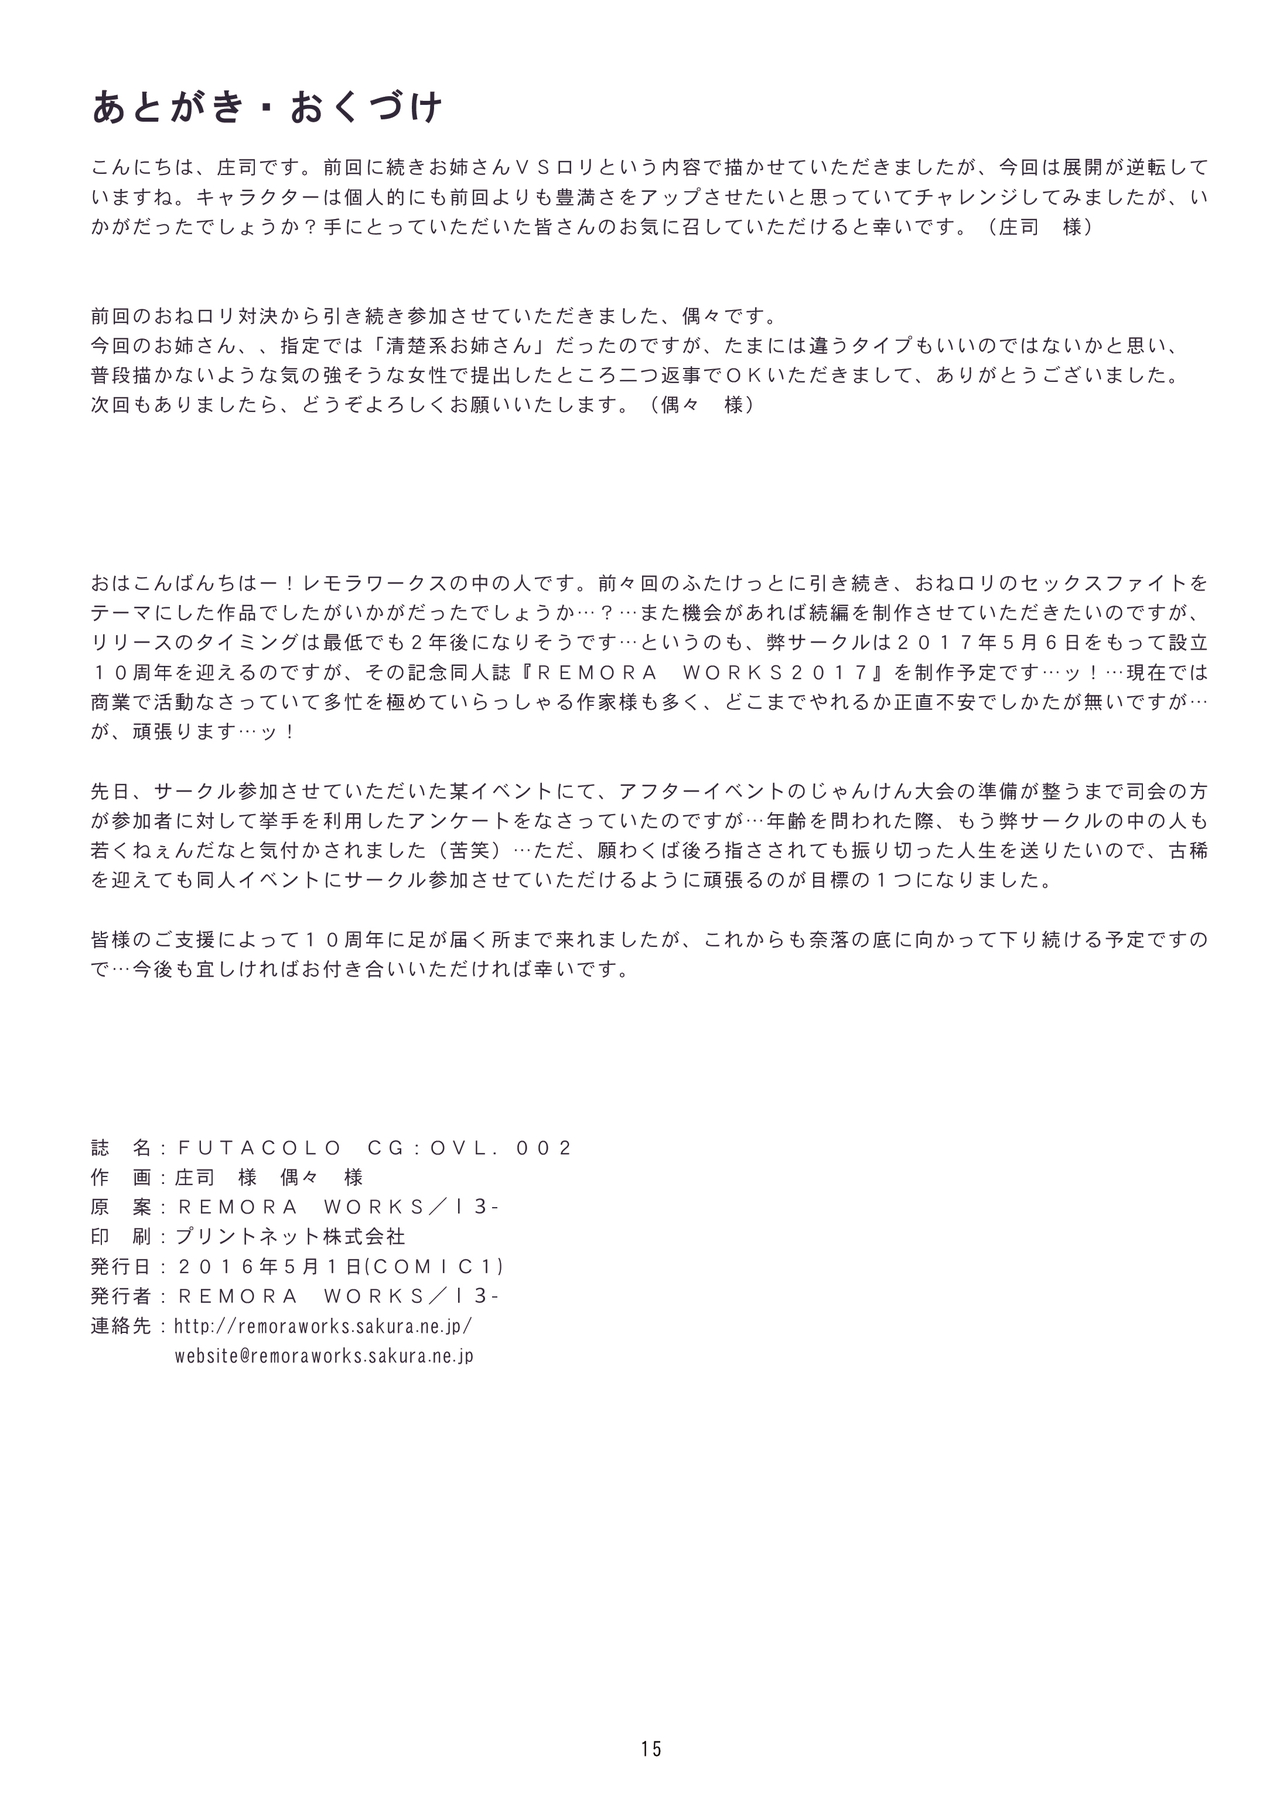 [remora works (伊佐木)] FUTACOLO CG:OVL VOL.002